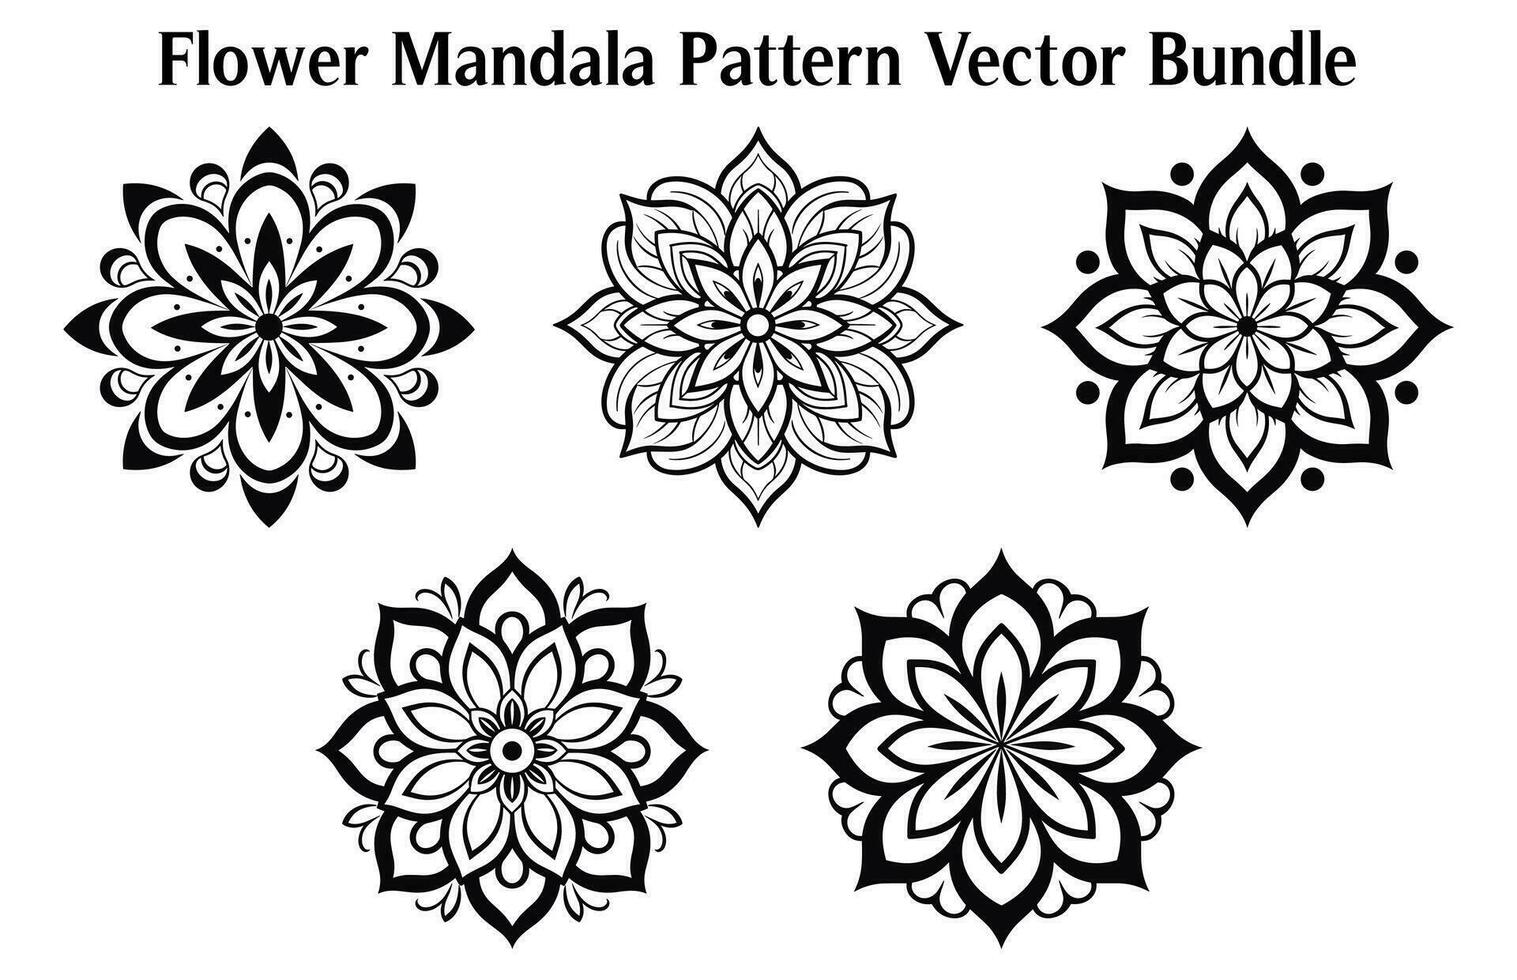 Black and white abstract circular pattern mandala, Mandala Line Drawing Design, Ornamental Mandala with floral patterns, Ornamental luxury mandala pattern, Set of Vector boho mandala illustration